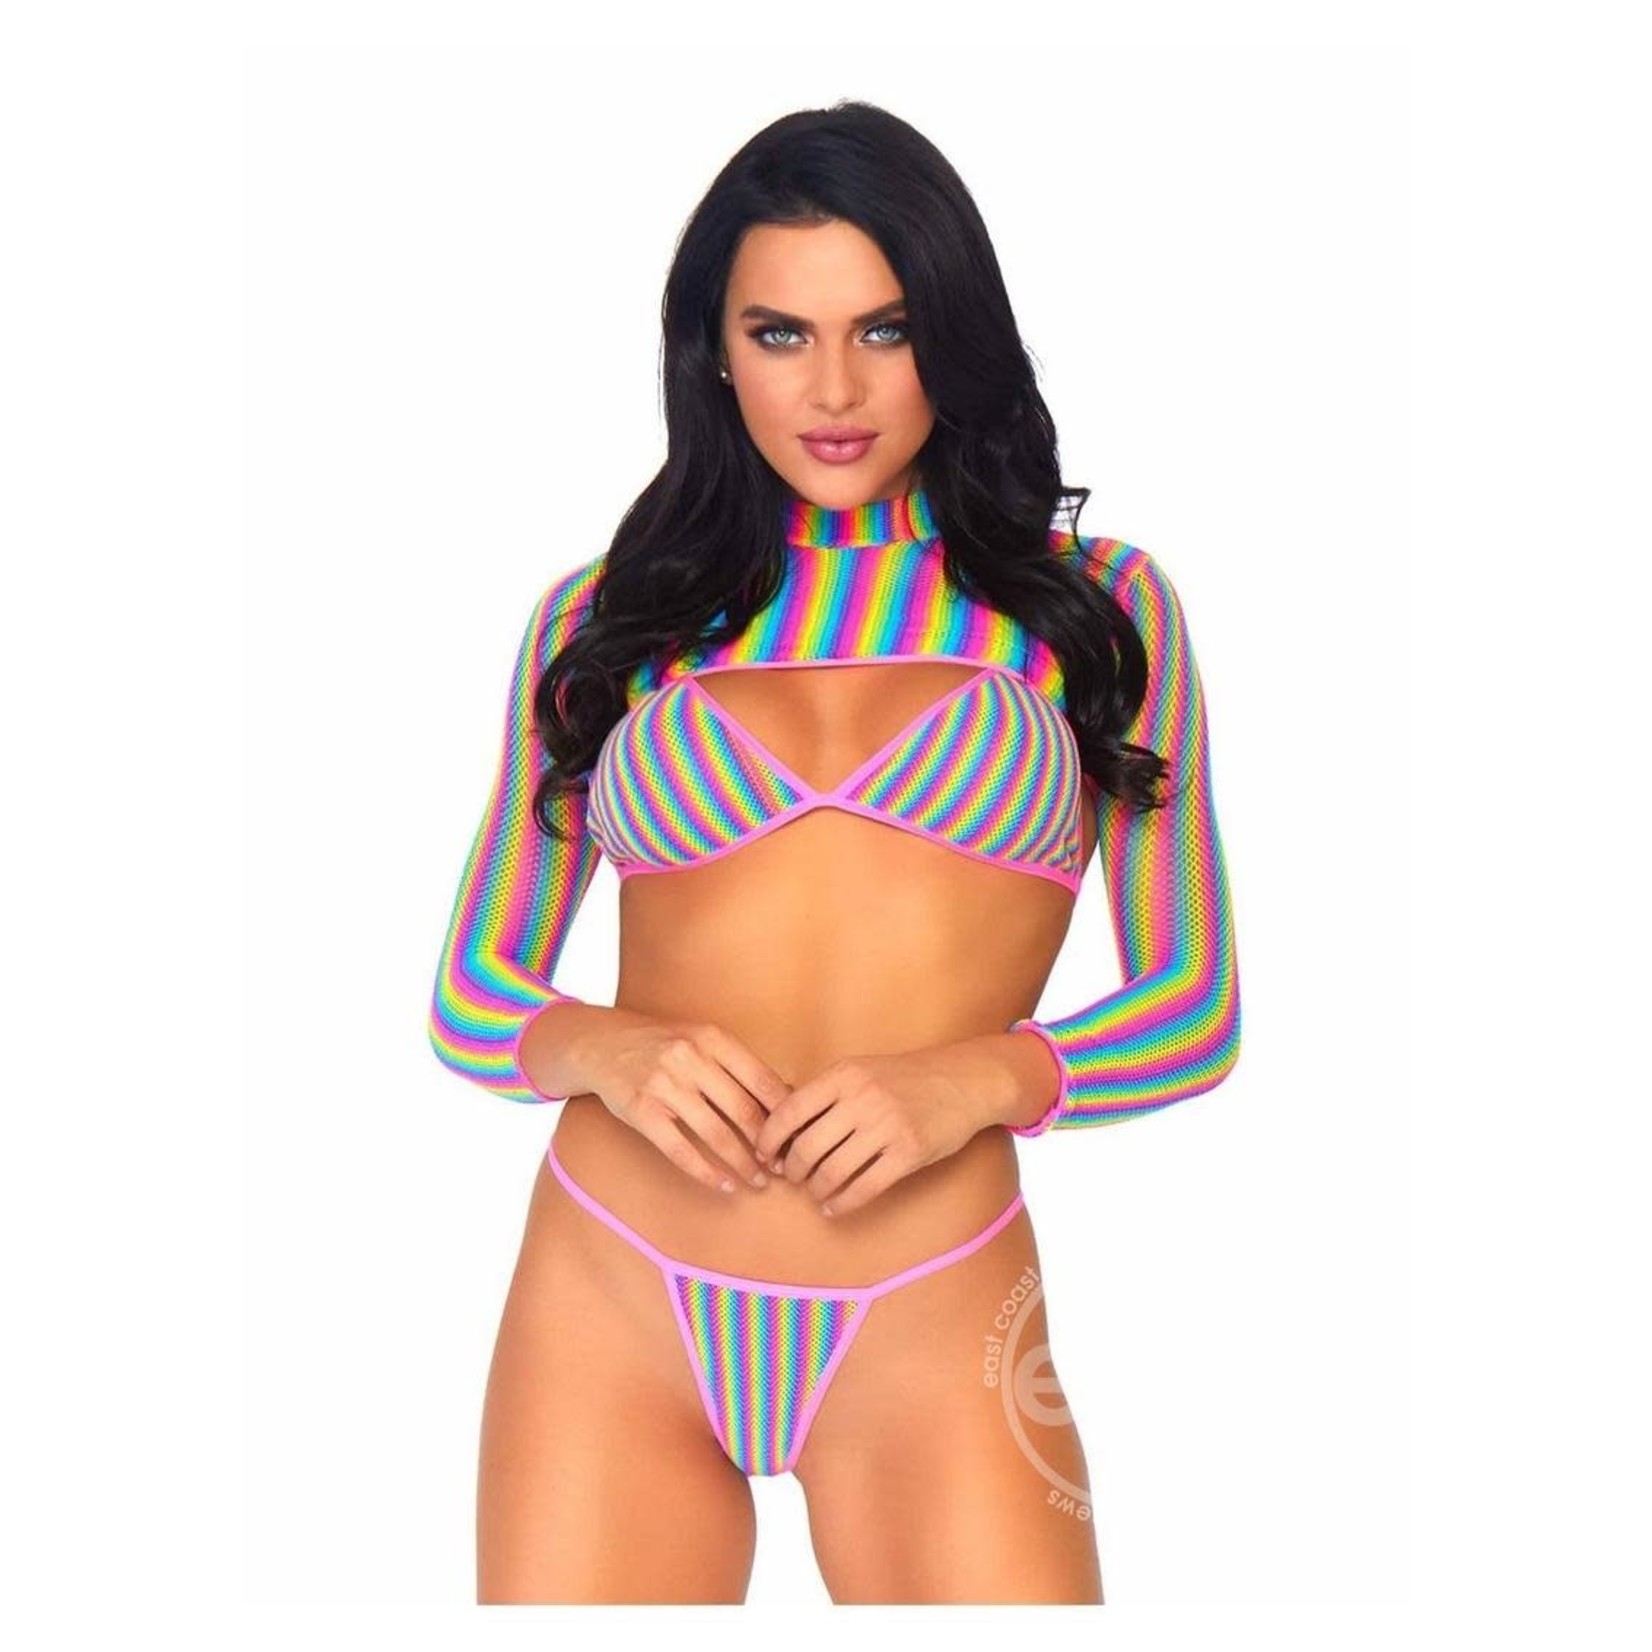 Leg Avenue Rainbow Fishnet Bikini Top, G-String, and Long Sleeved Crop Top (3 Piece) - O/S - Multicolor